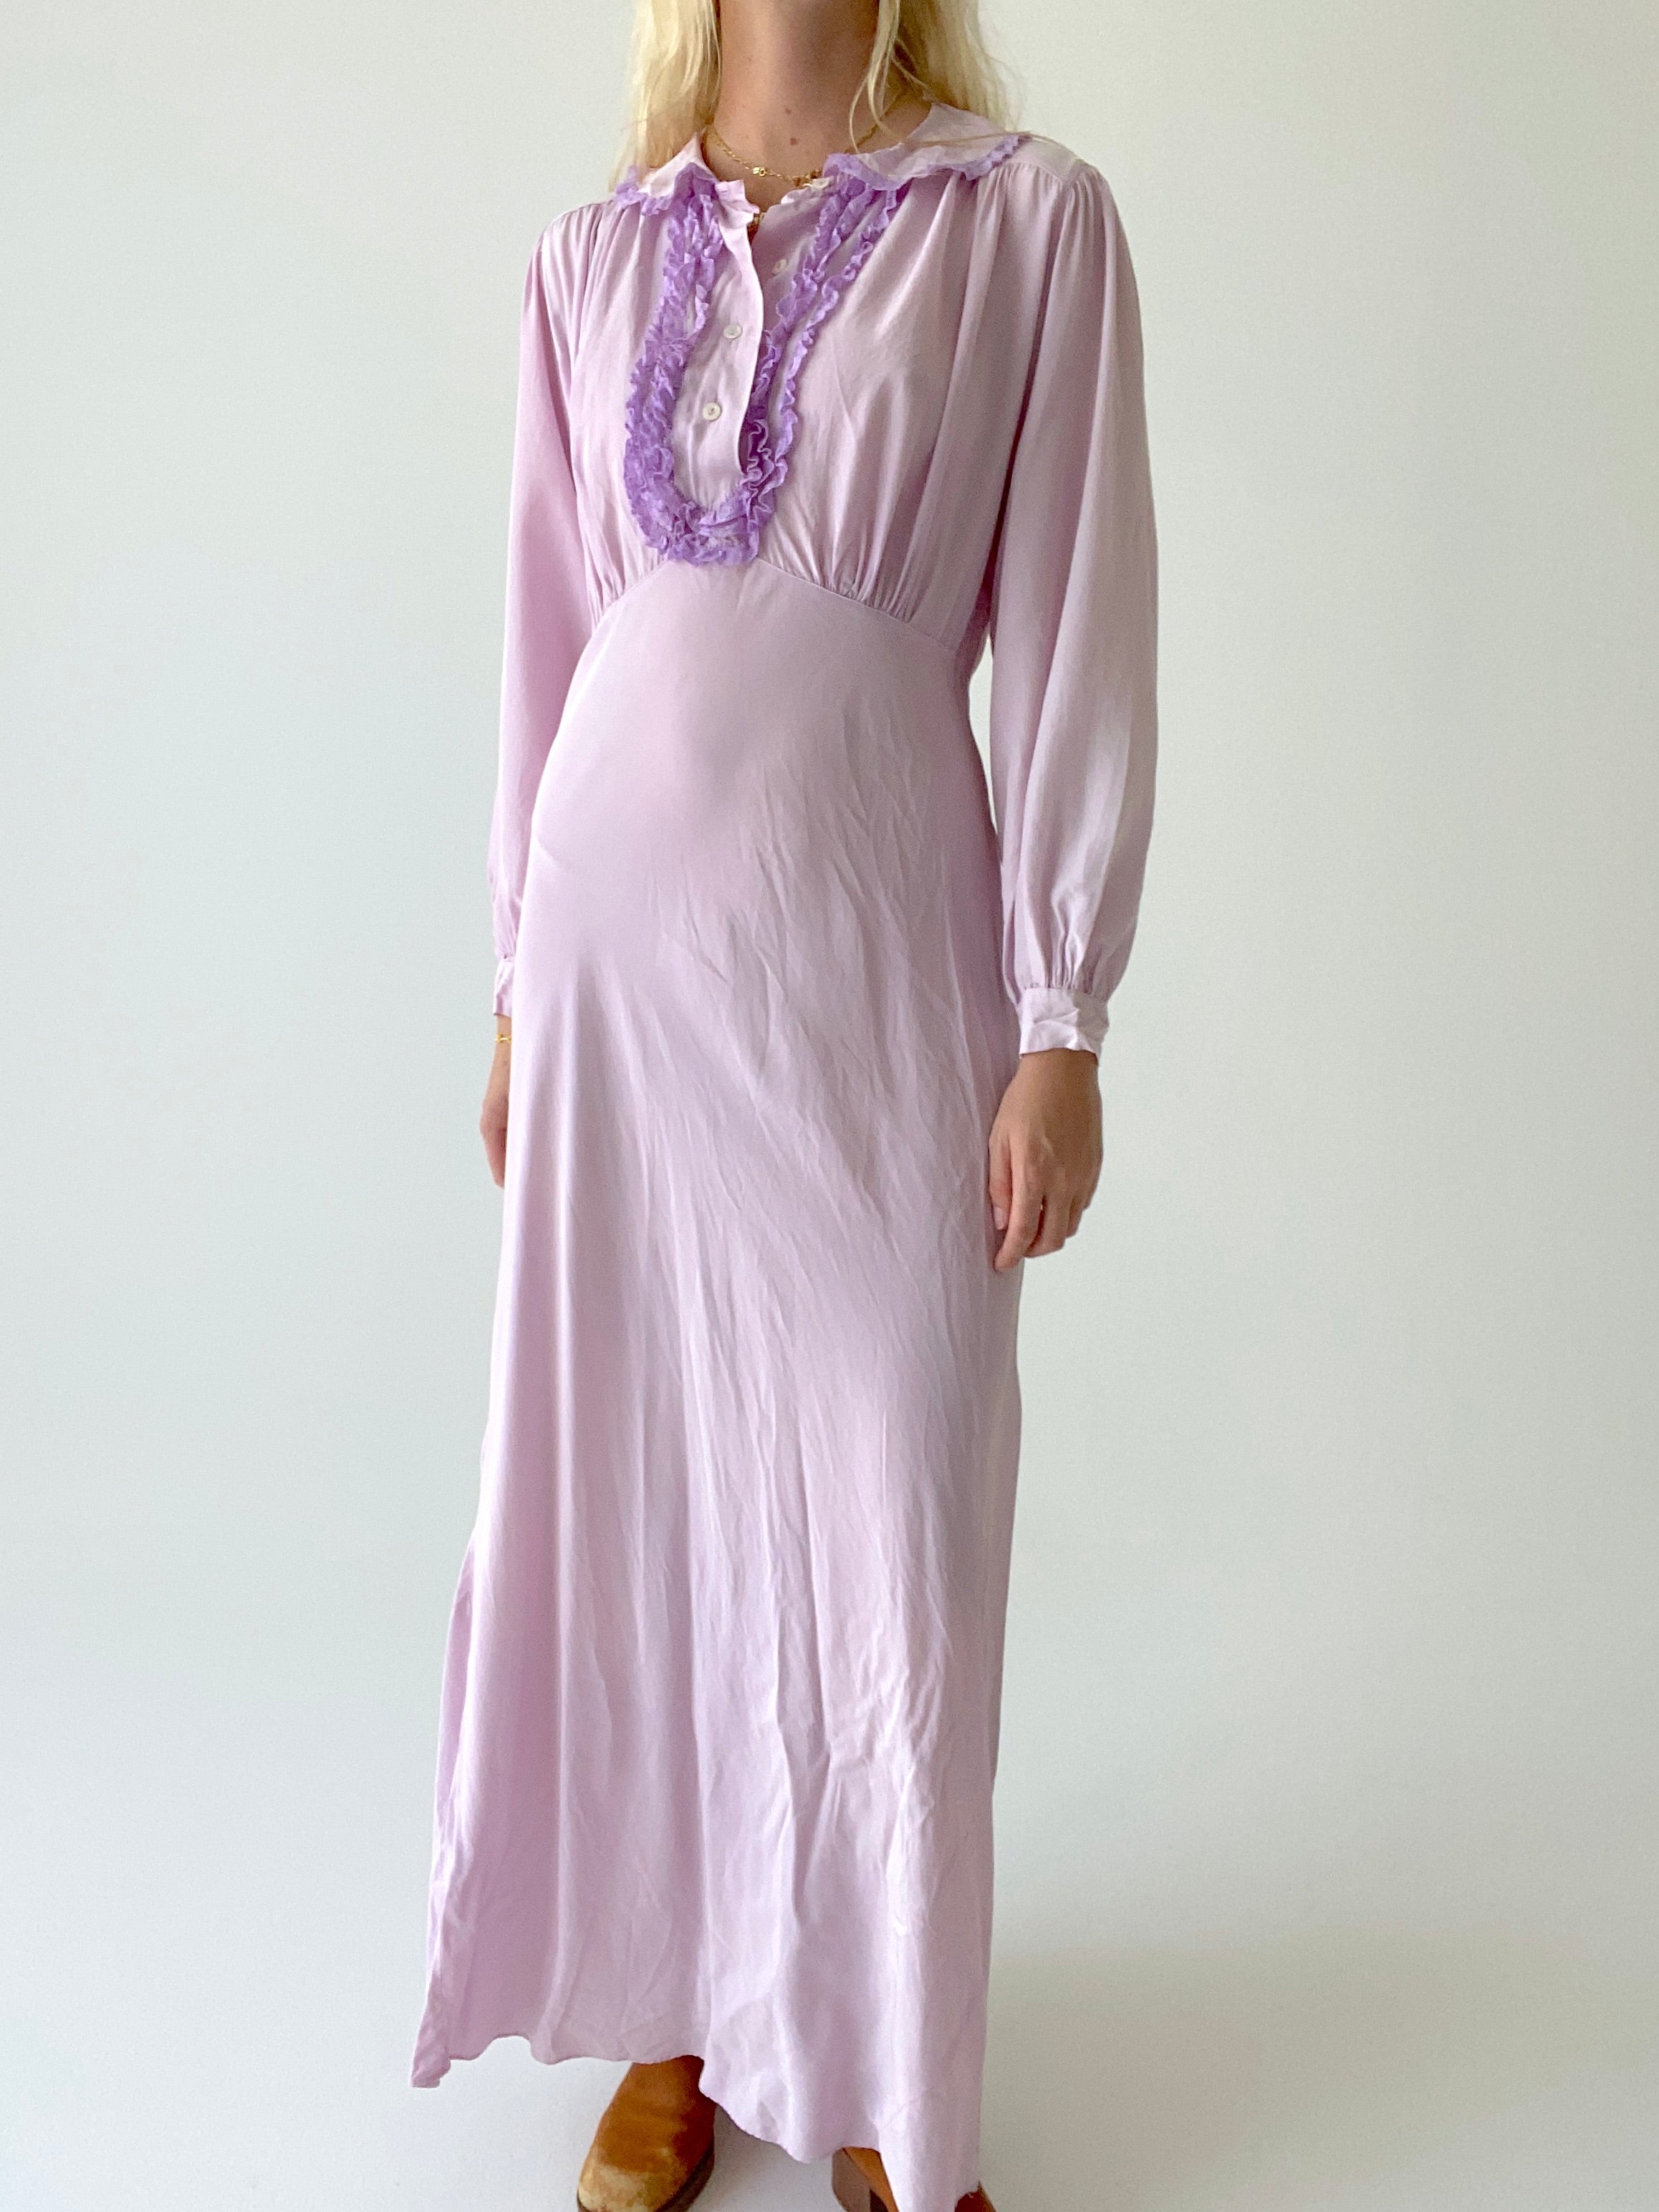 Hand Dyed Saie Lilac Long Sleeve Dress